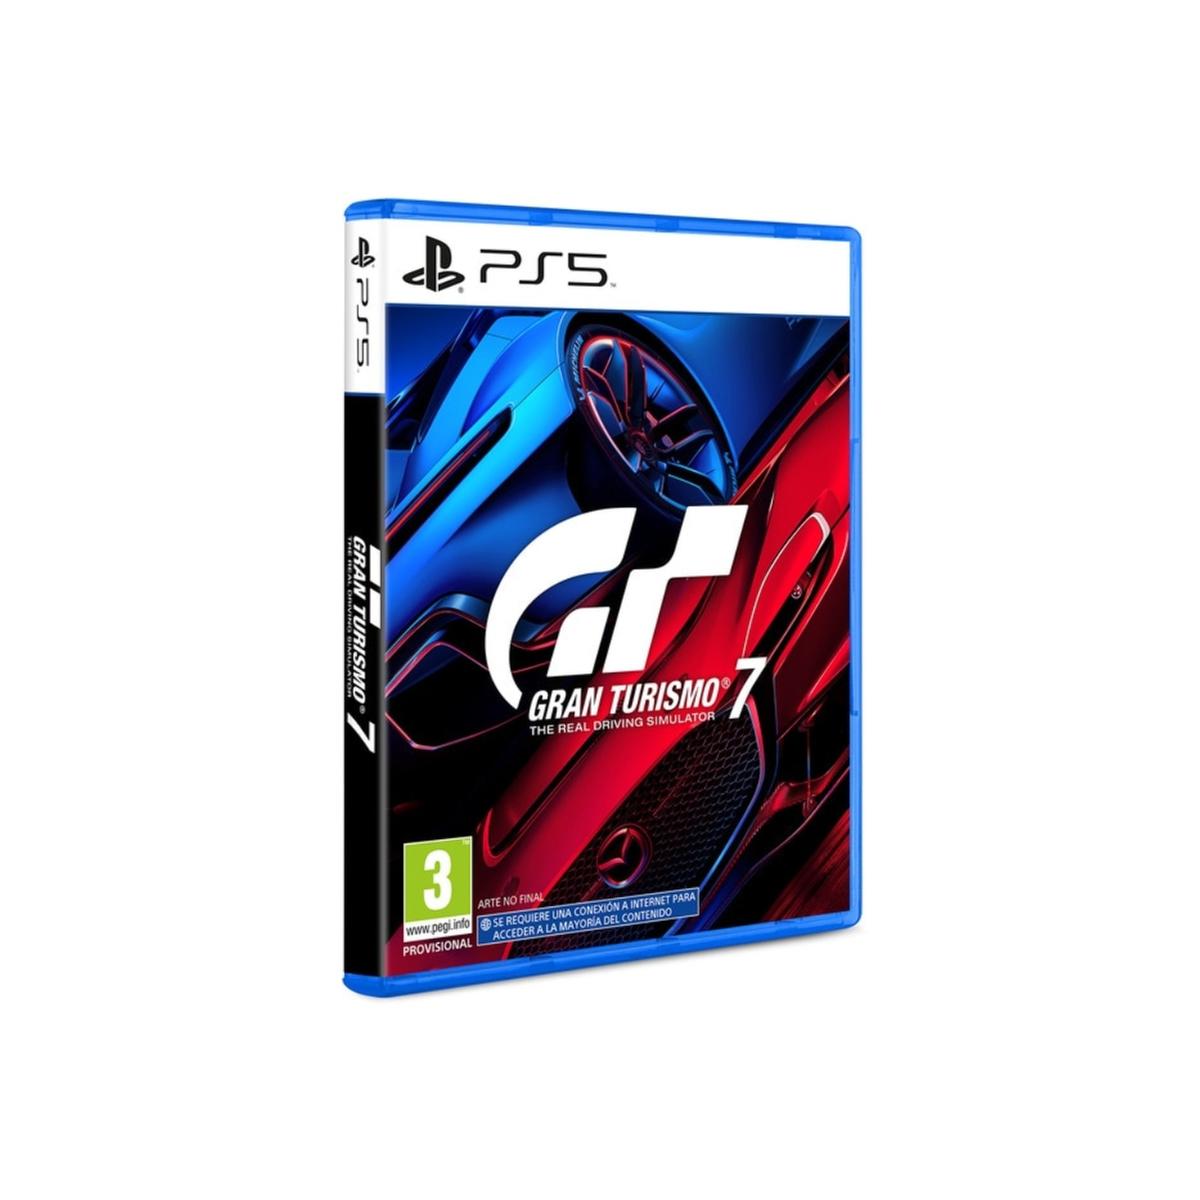 PS5 - Gran Turismo 7, Software